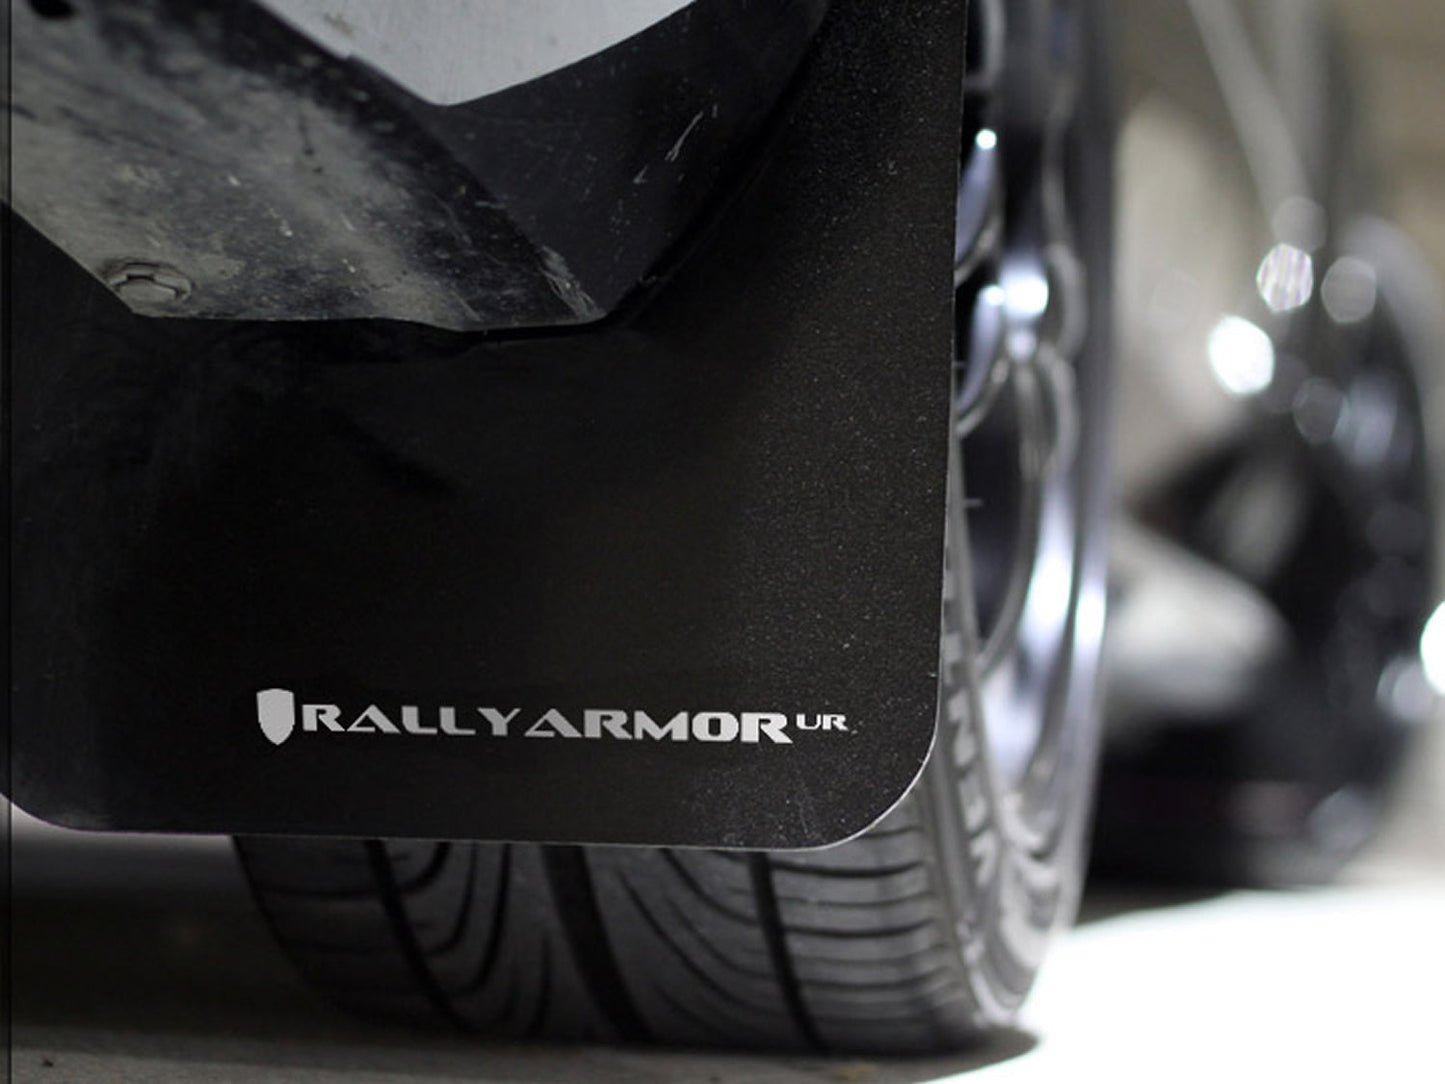 Rally Armor UR Mud Flaps - Fits Subaru Impreza 2008-2011 - WRX 2008-2010